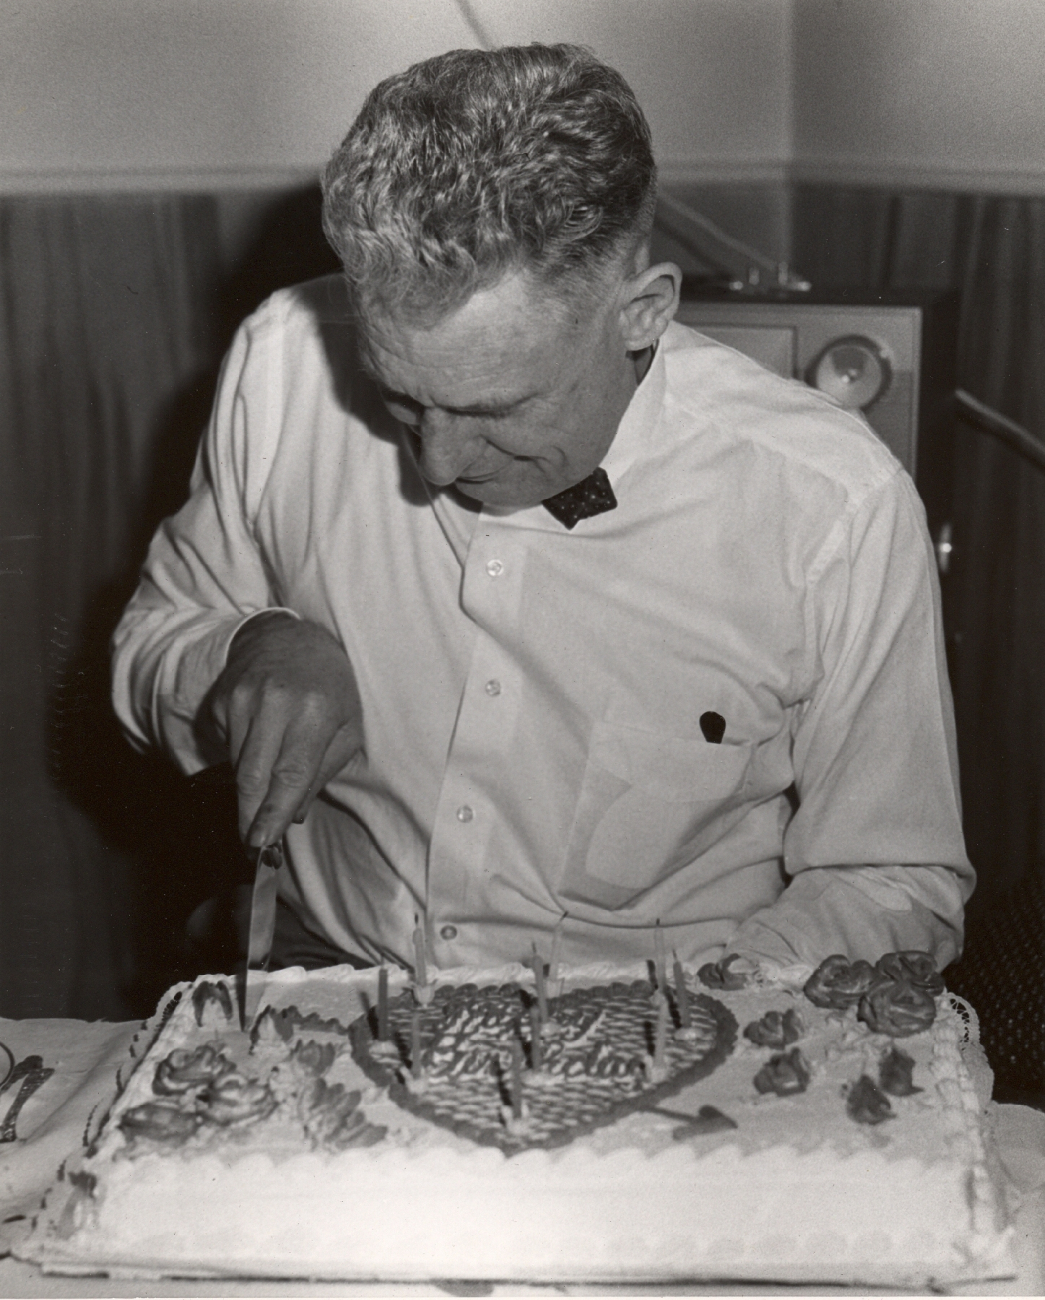 Commander David Whipp cutting birthday cake